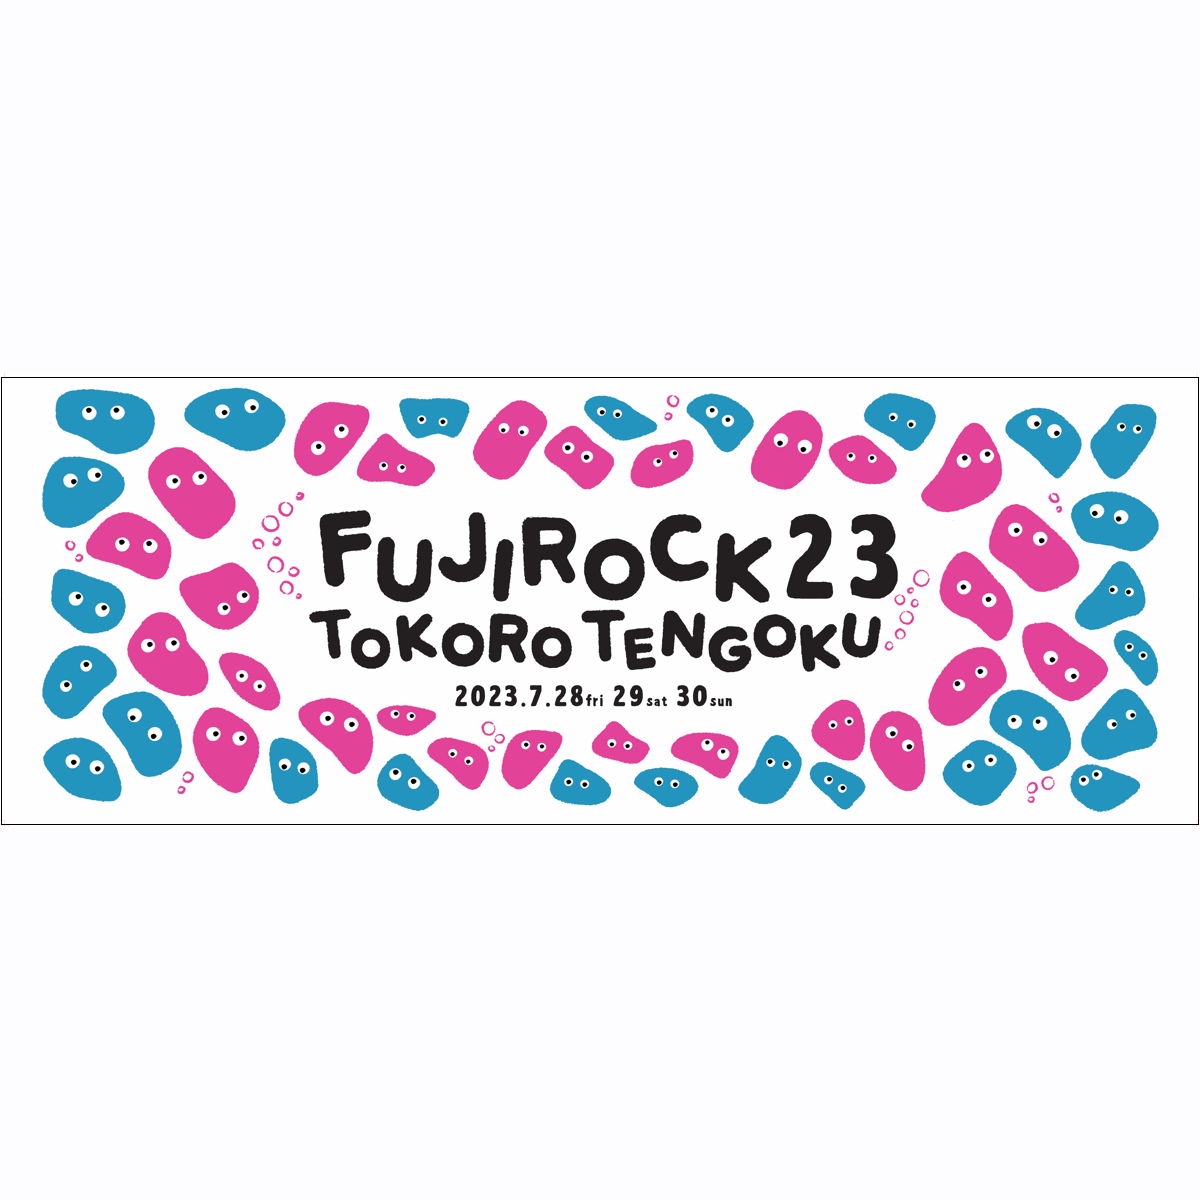 FUJI ROCK 23 × TOKORO TENGOKU